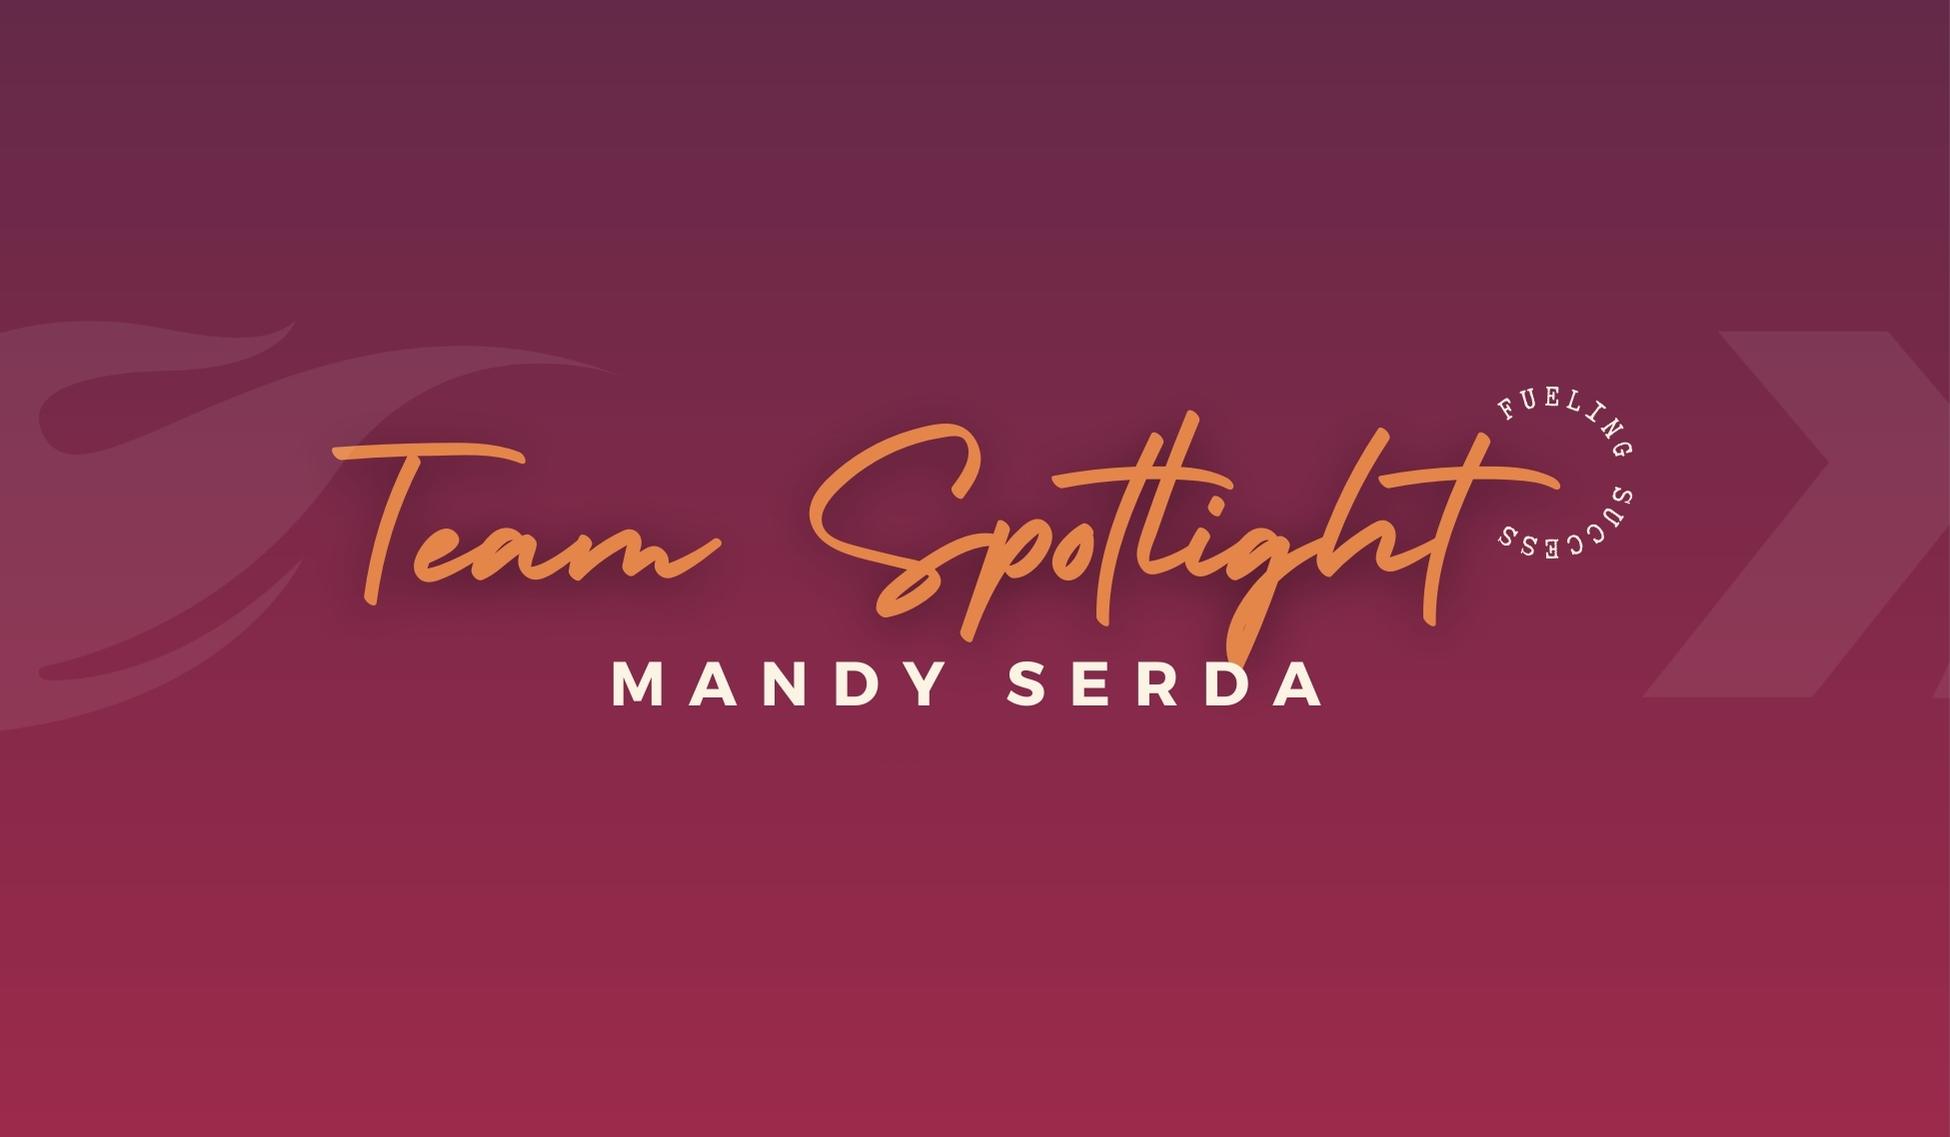 Employee Spotlight: Mandy Serda